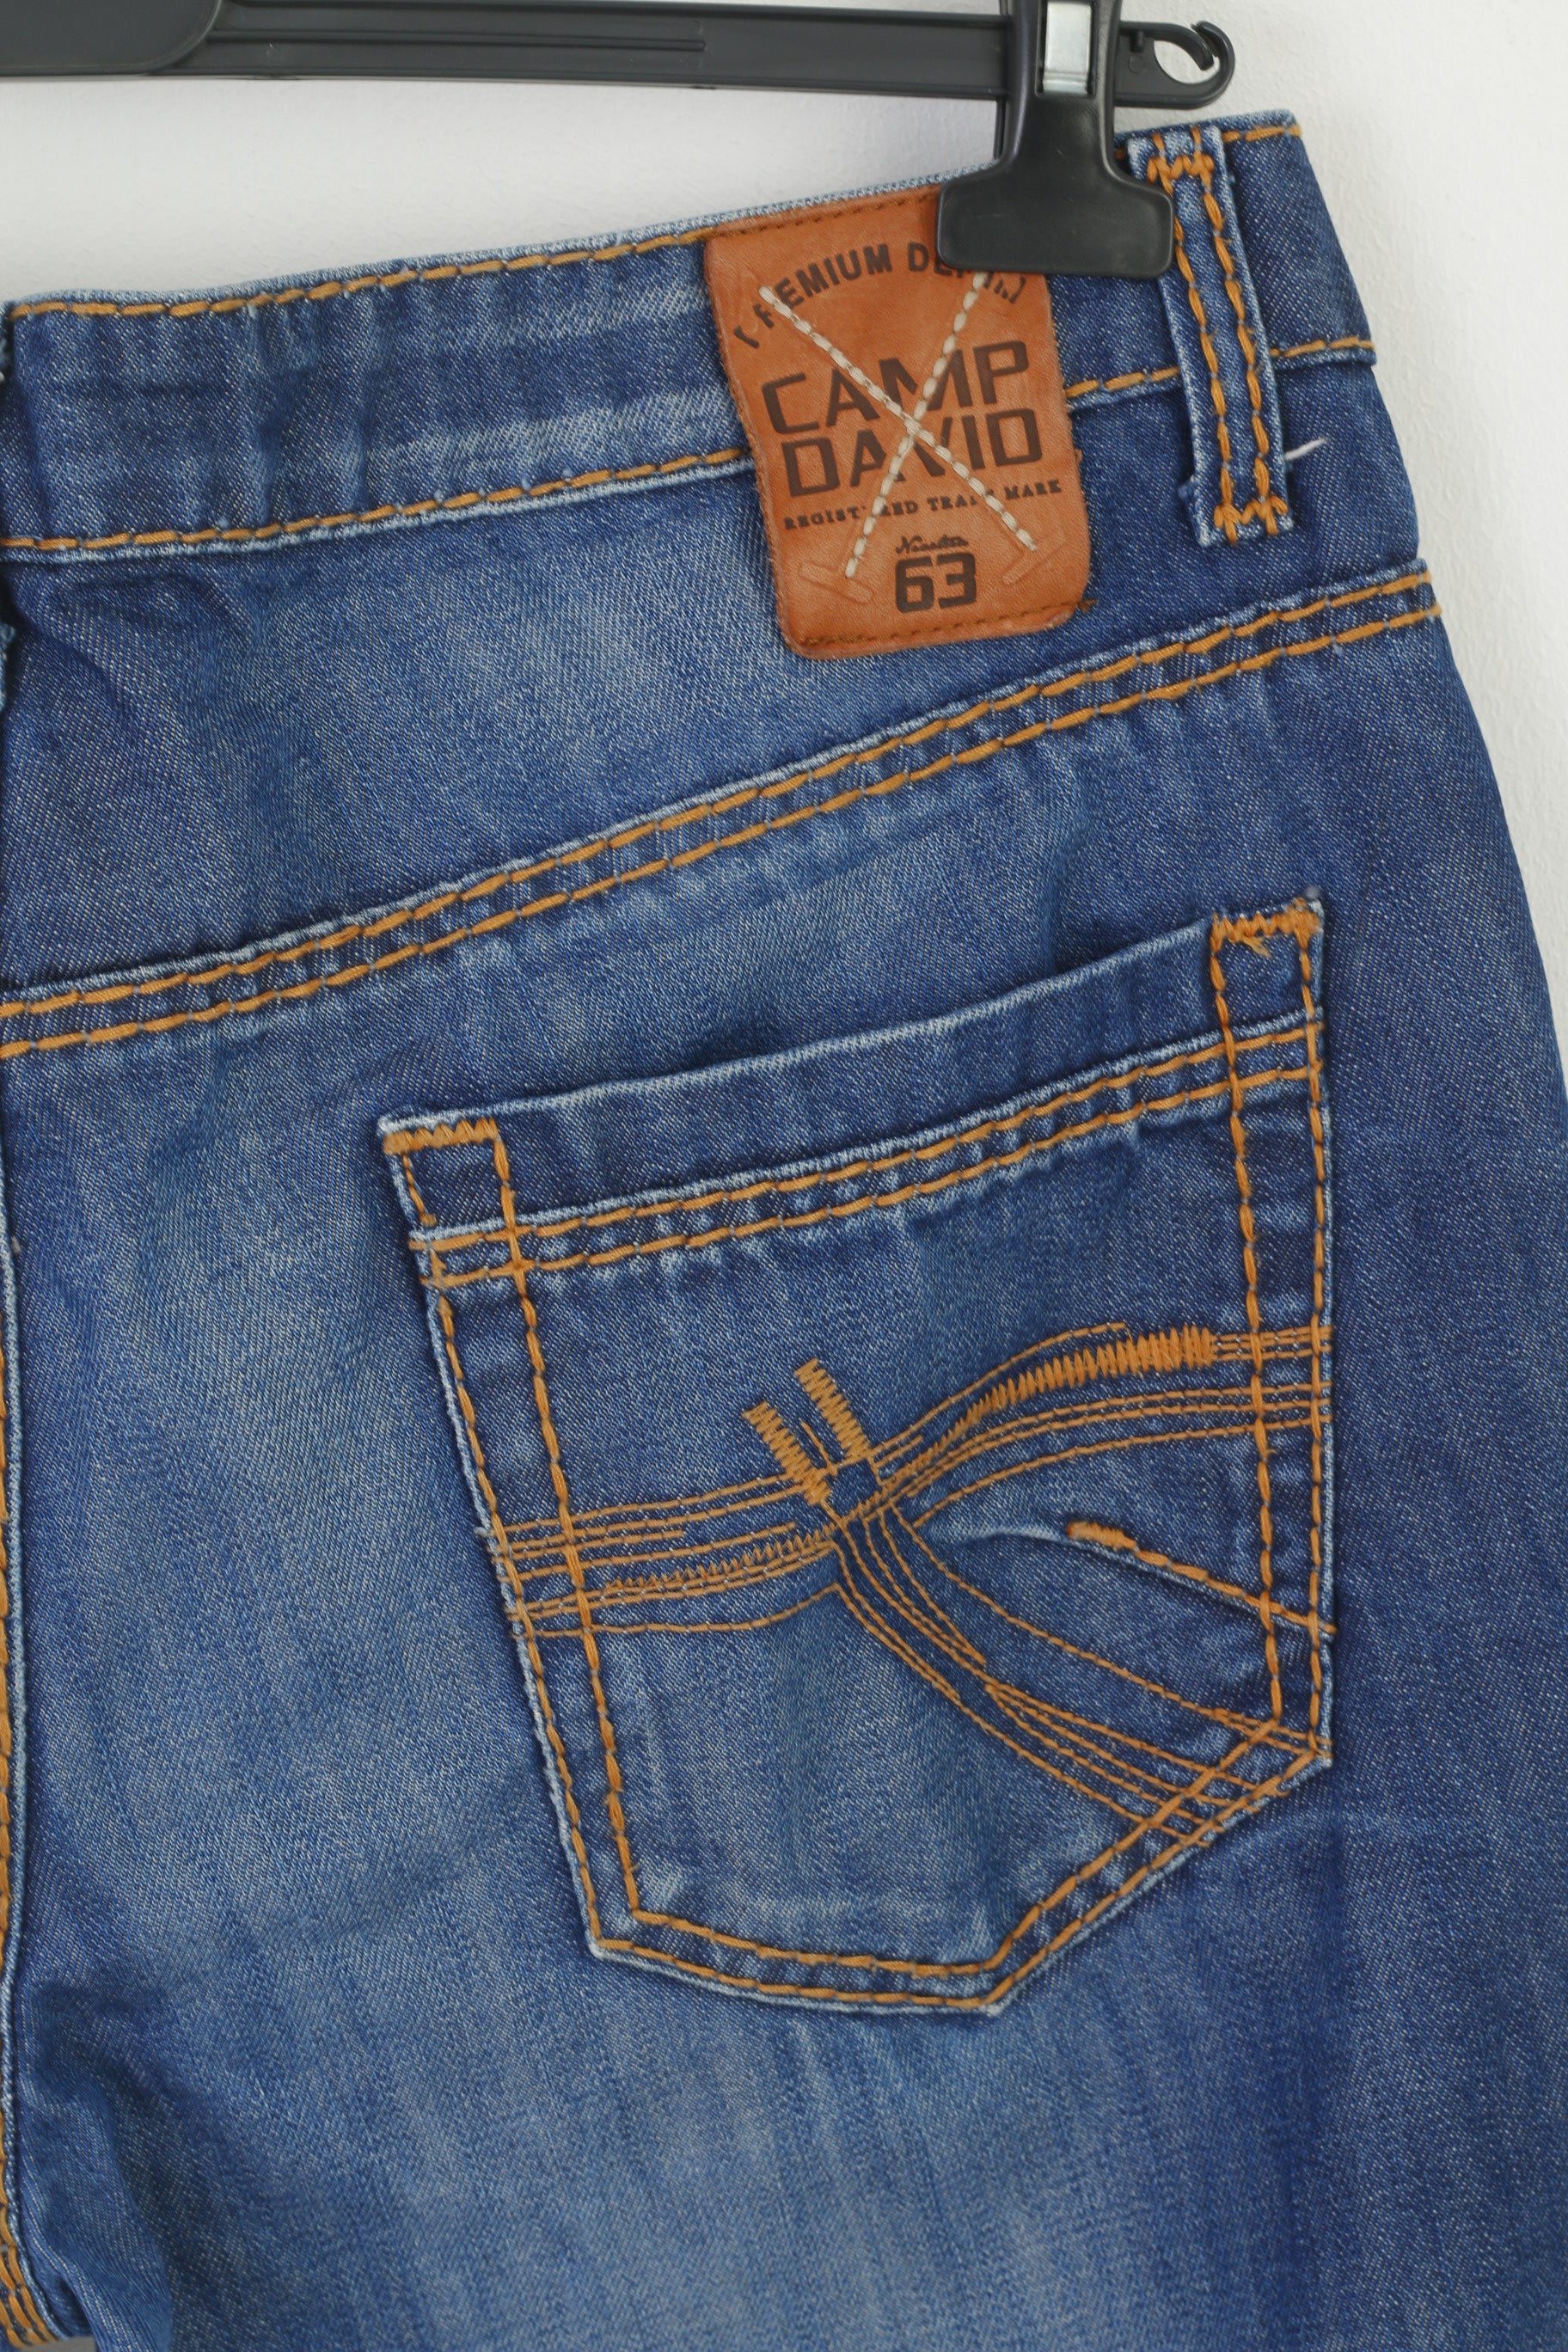 neu angekommen Camp David Trousers Cotton Straight P Navy Men Jeans Clothes – Long Leg Retrospect 36 Denim